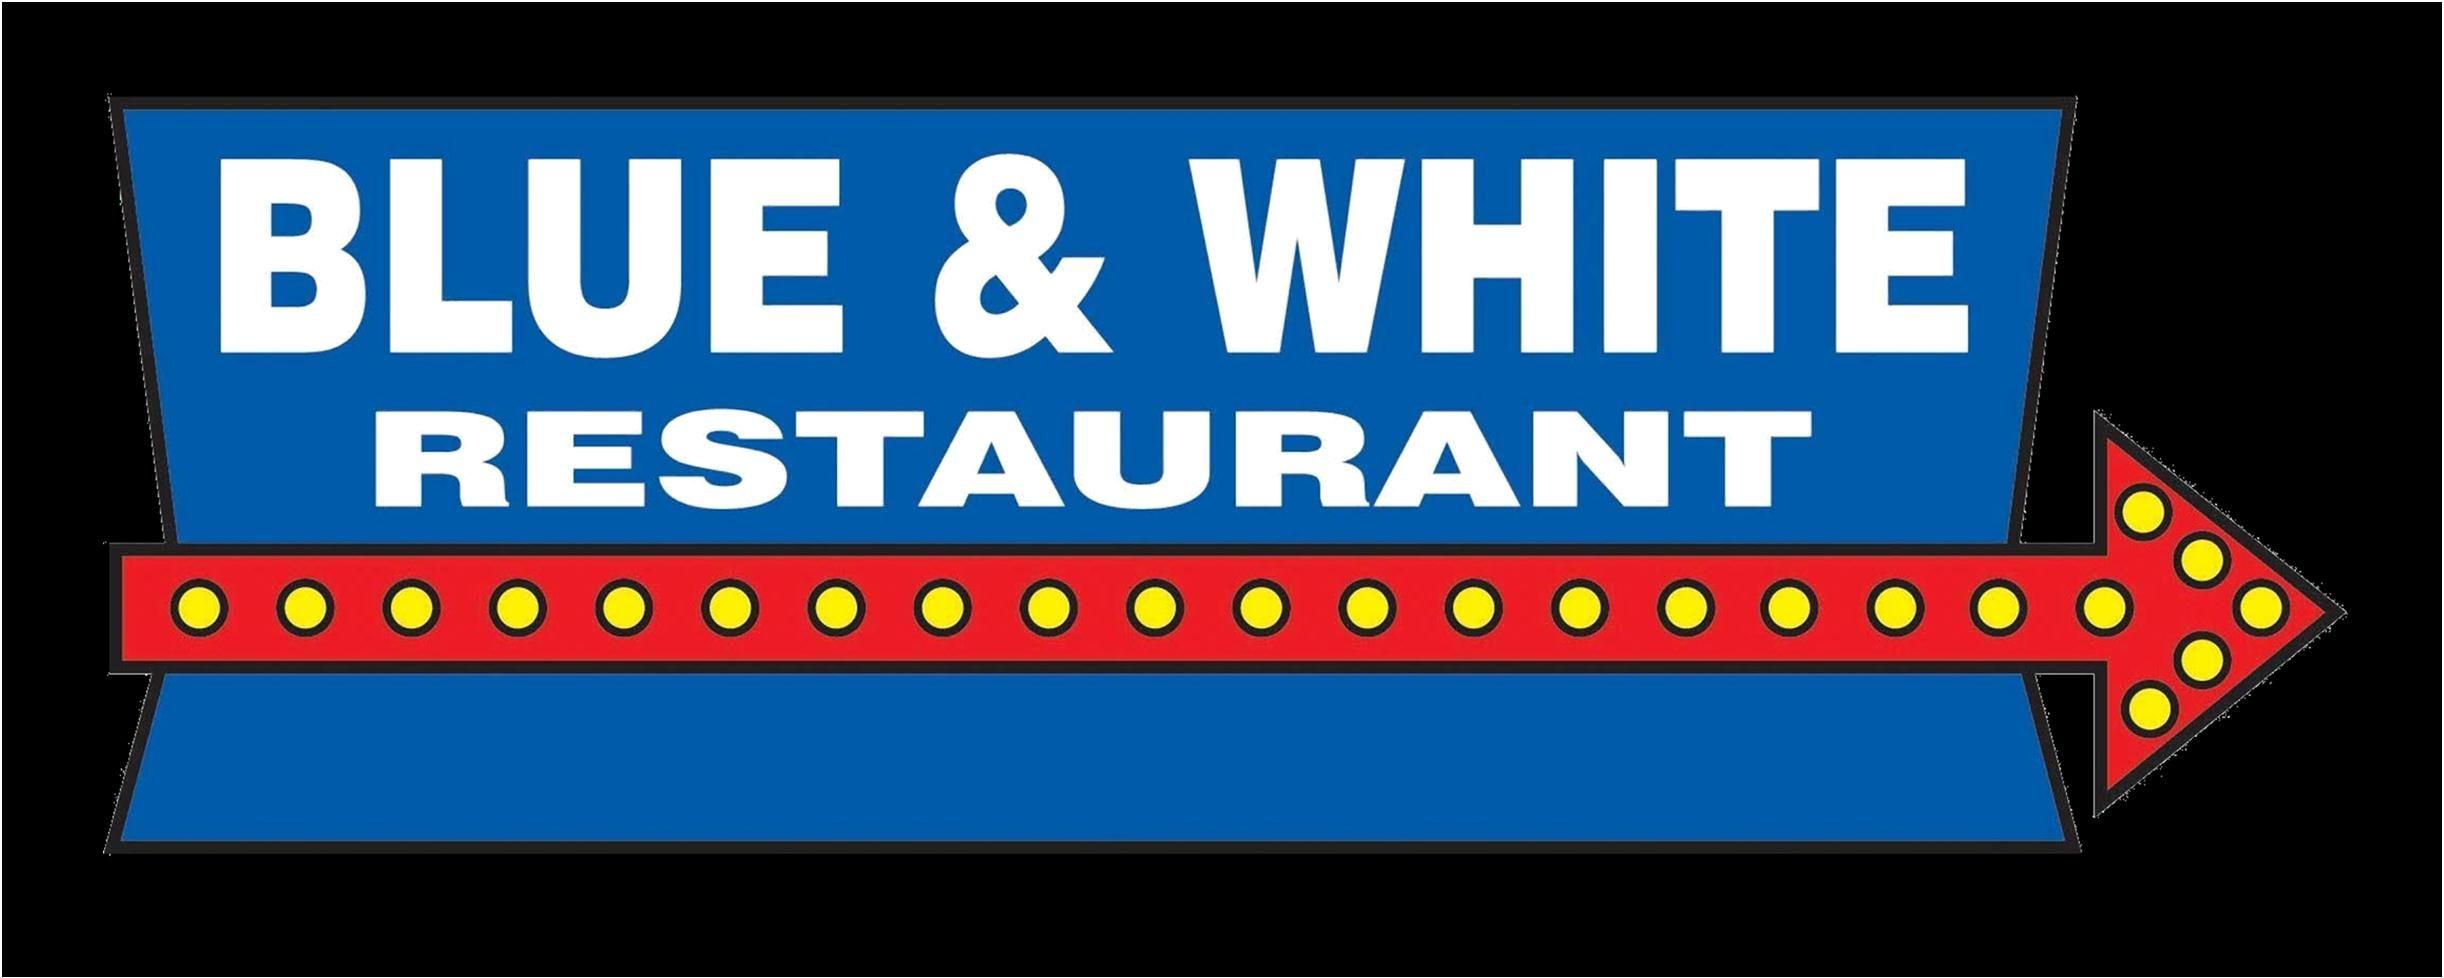 Blue and White Restaurant Logo - Blue and White Restaurant. Established Since 1924